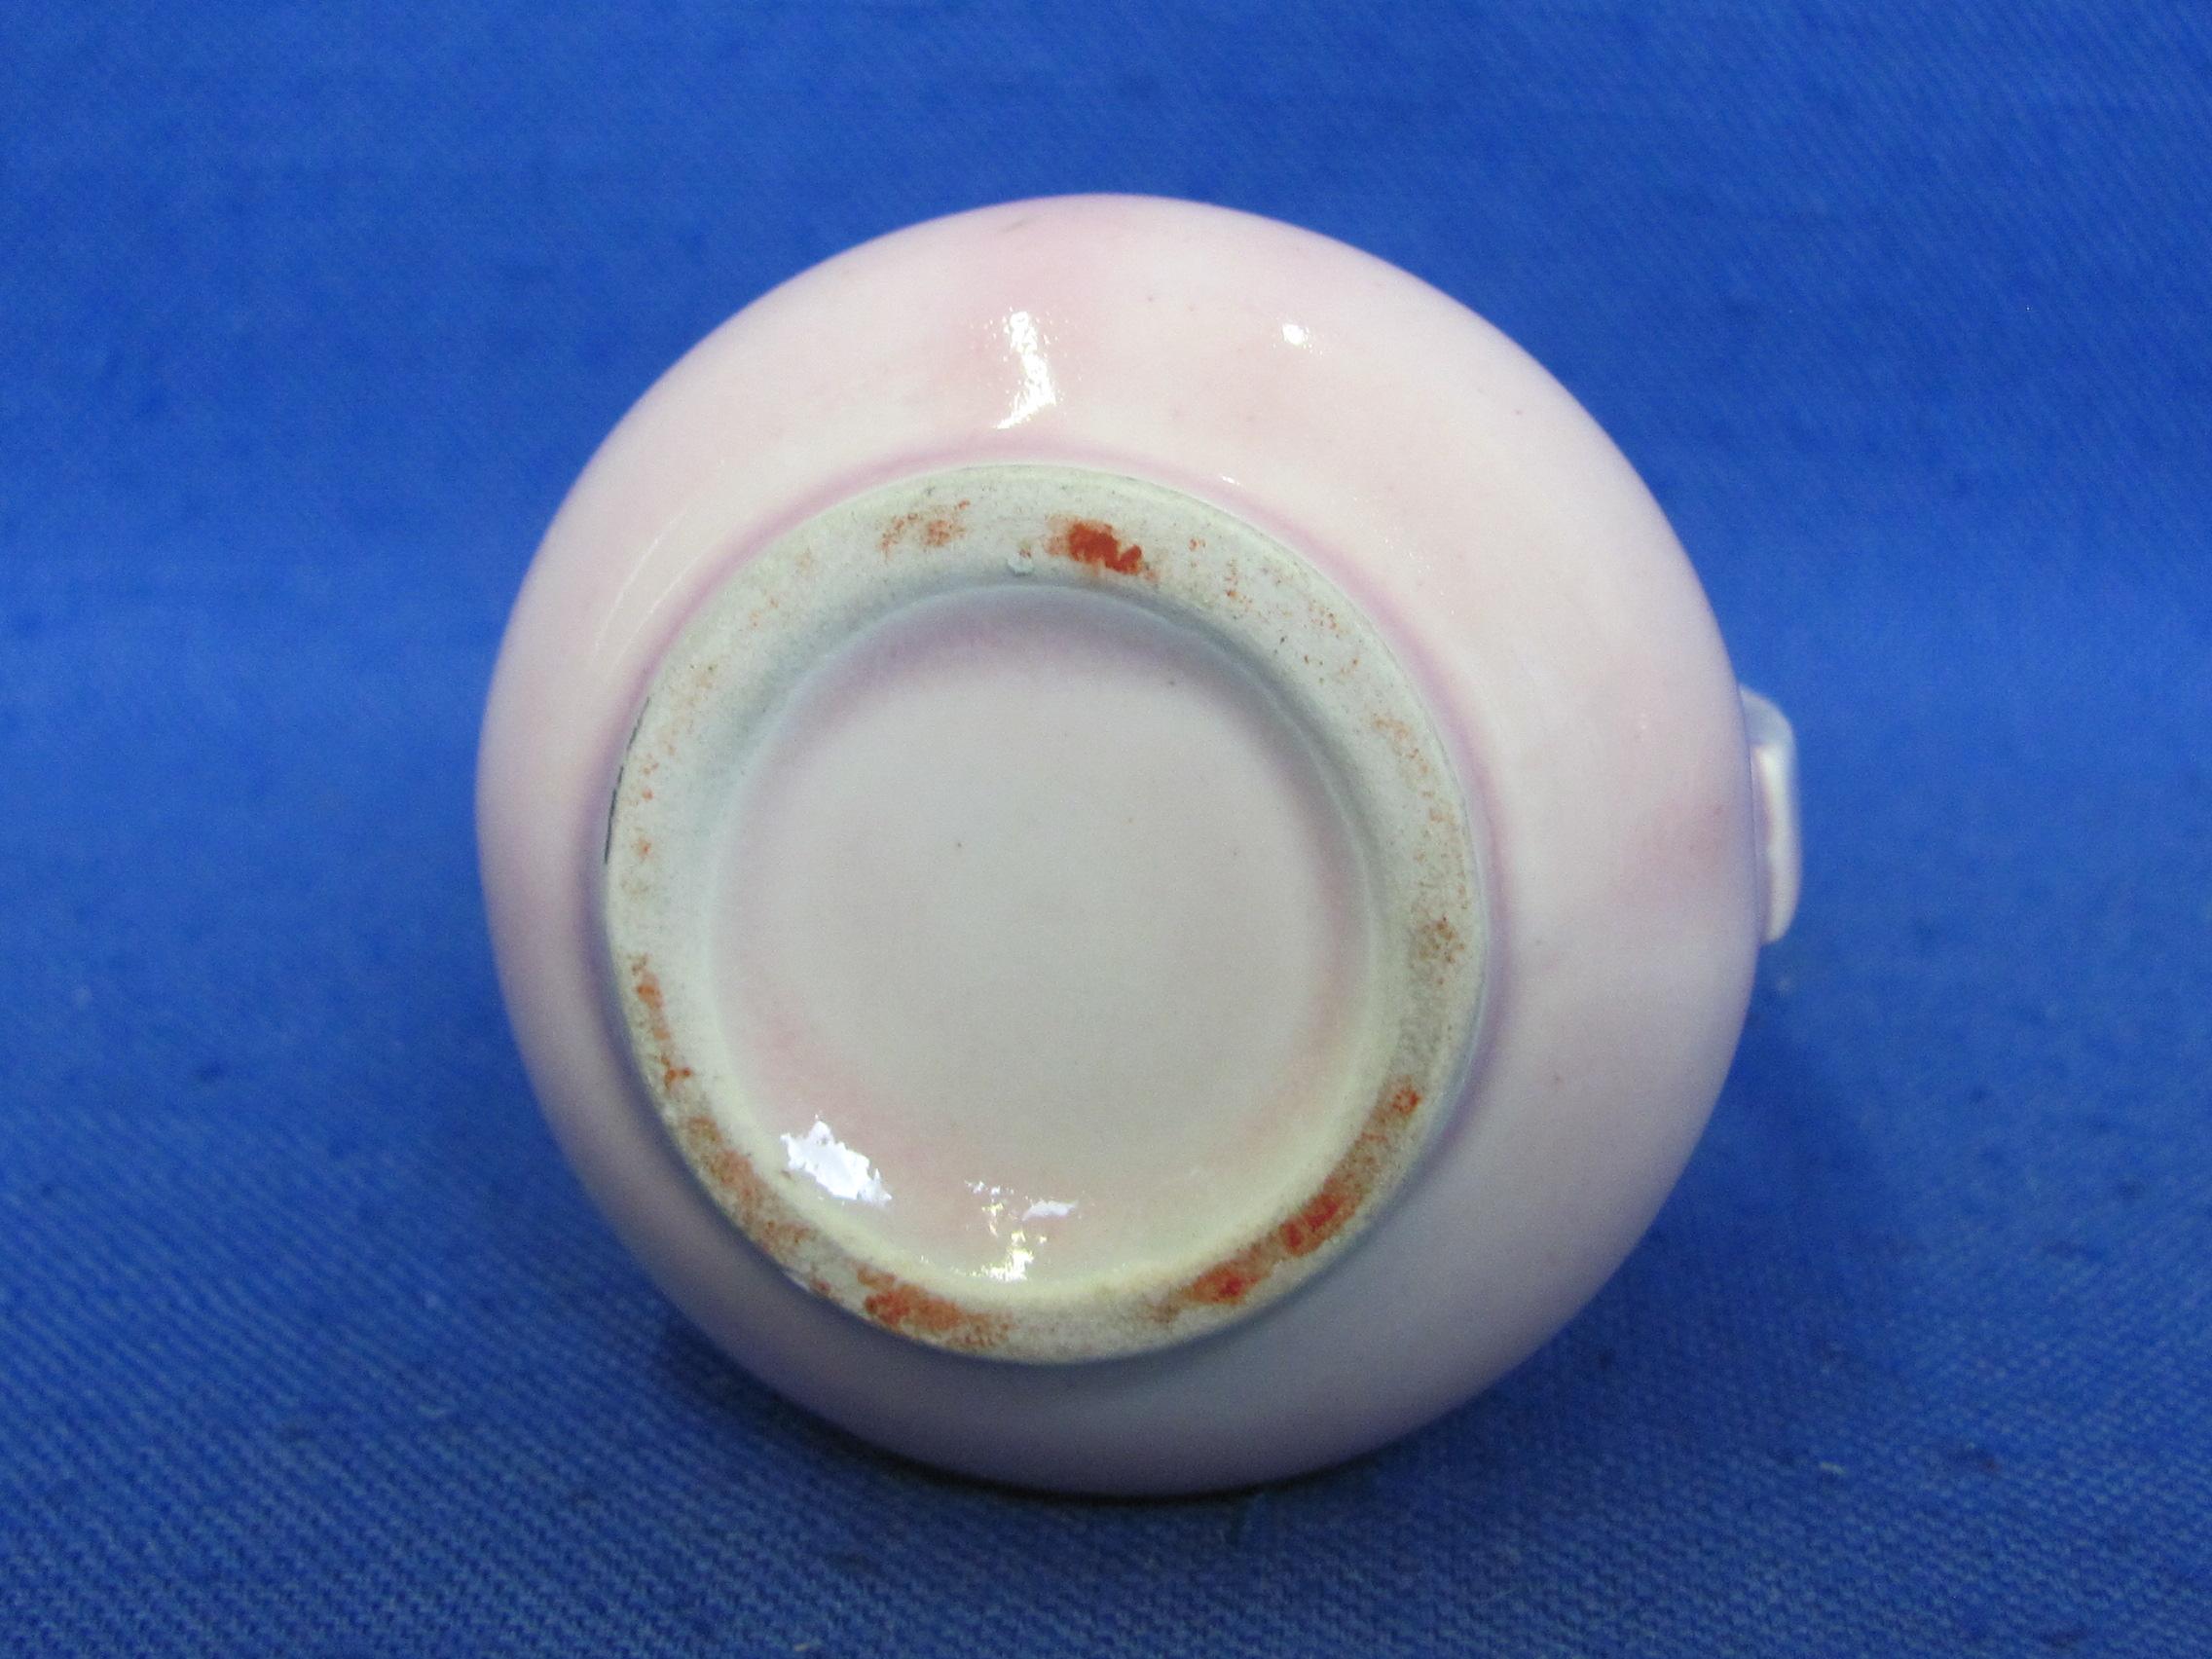 Shawnee Miniature Pink Vase & Small Pottery Cornucopia Planter – Vase is 3” tall